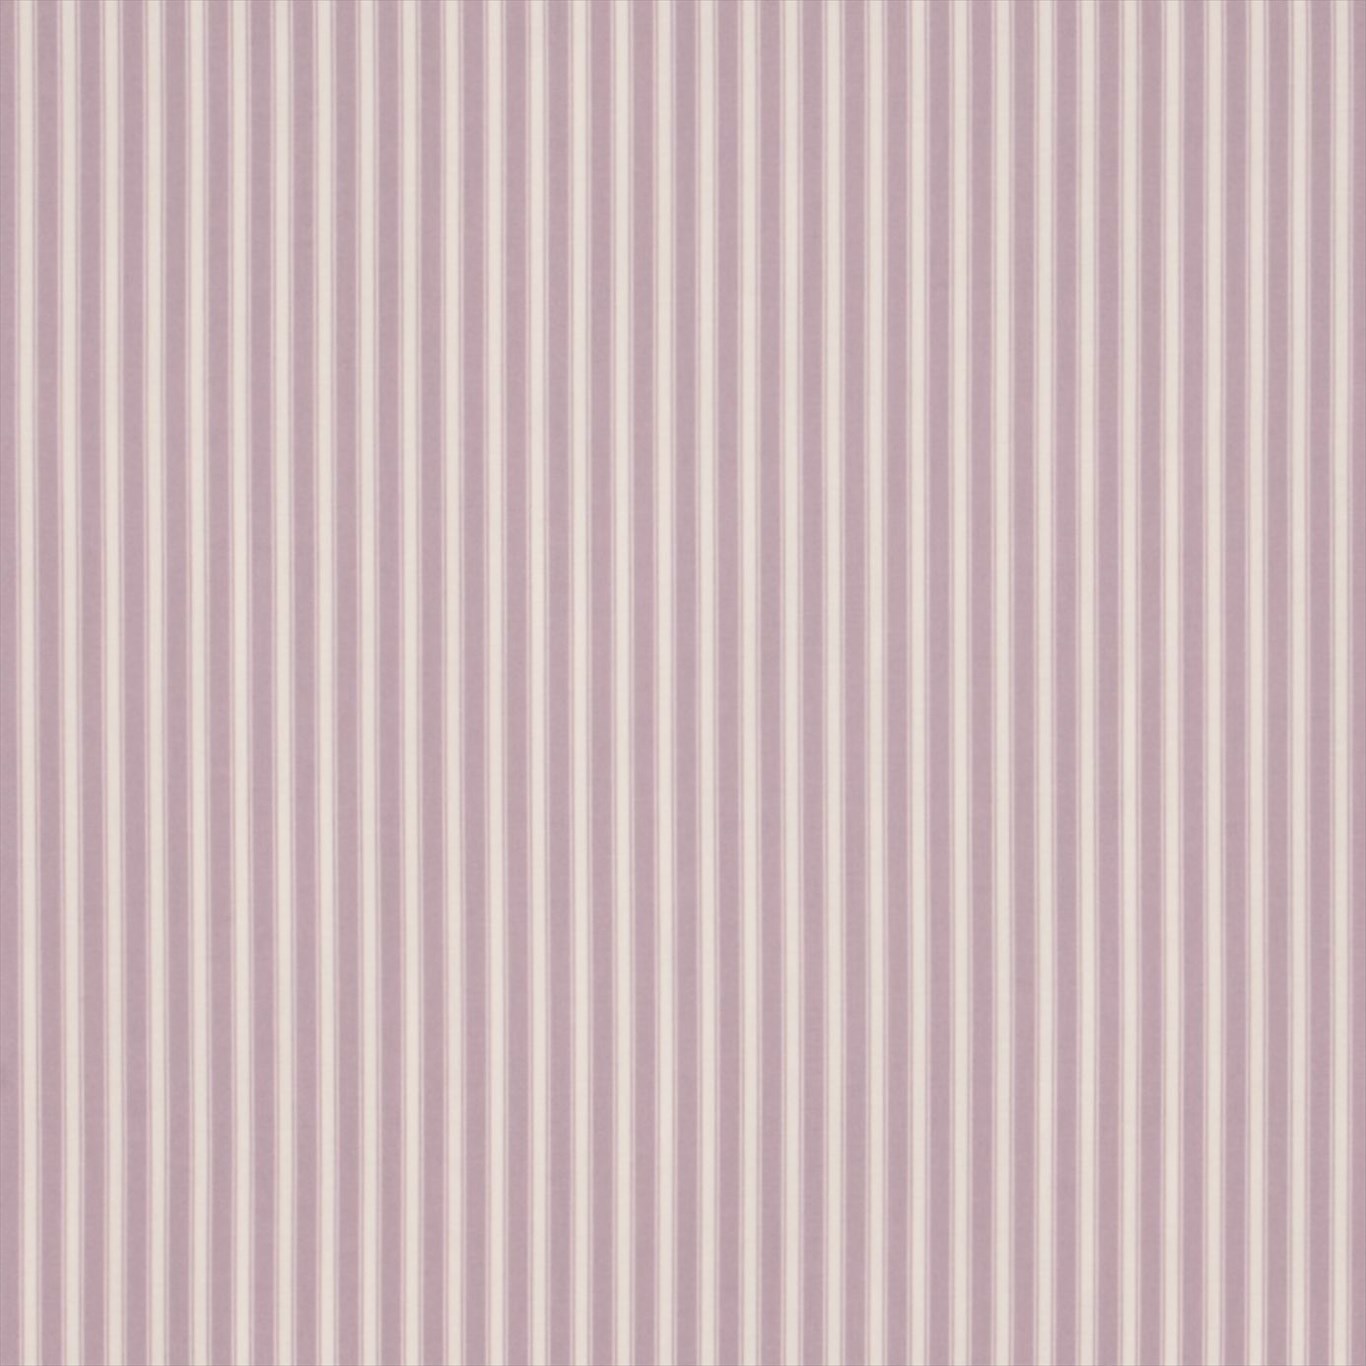 Tiger Stripe Lavender/Ivory Fabric by SAN